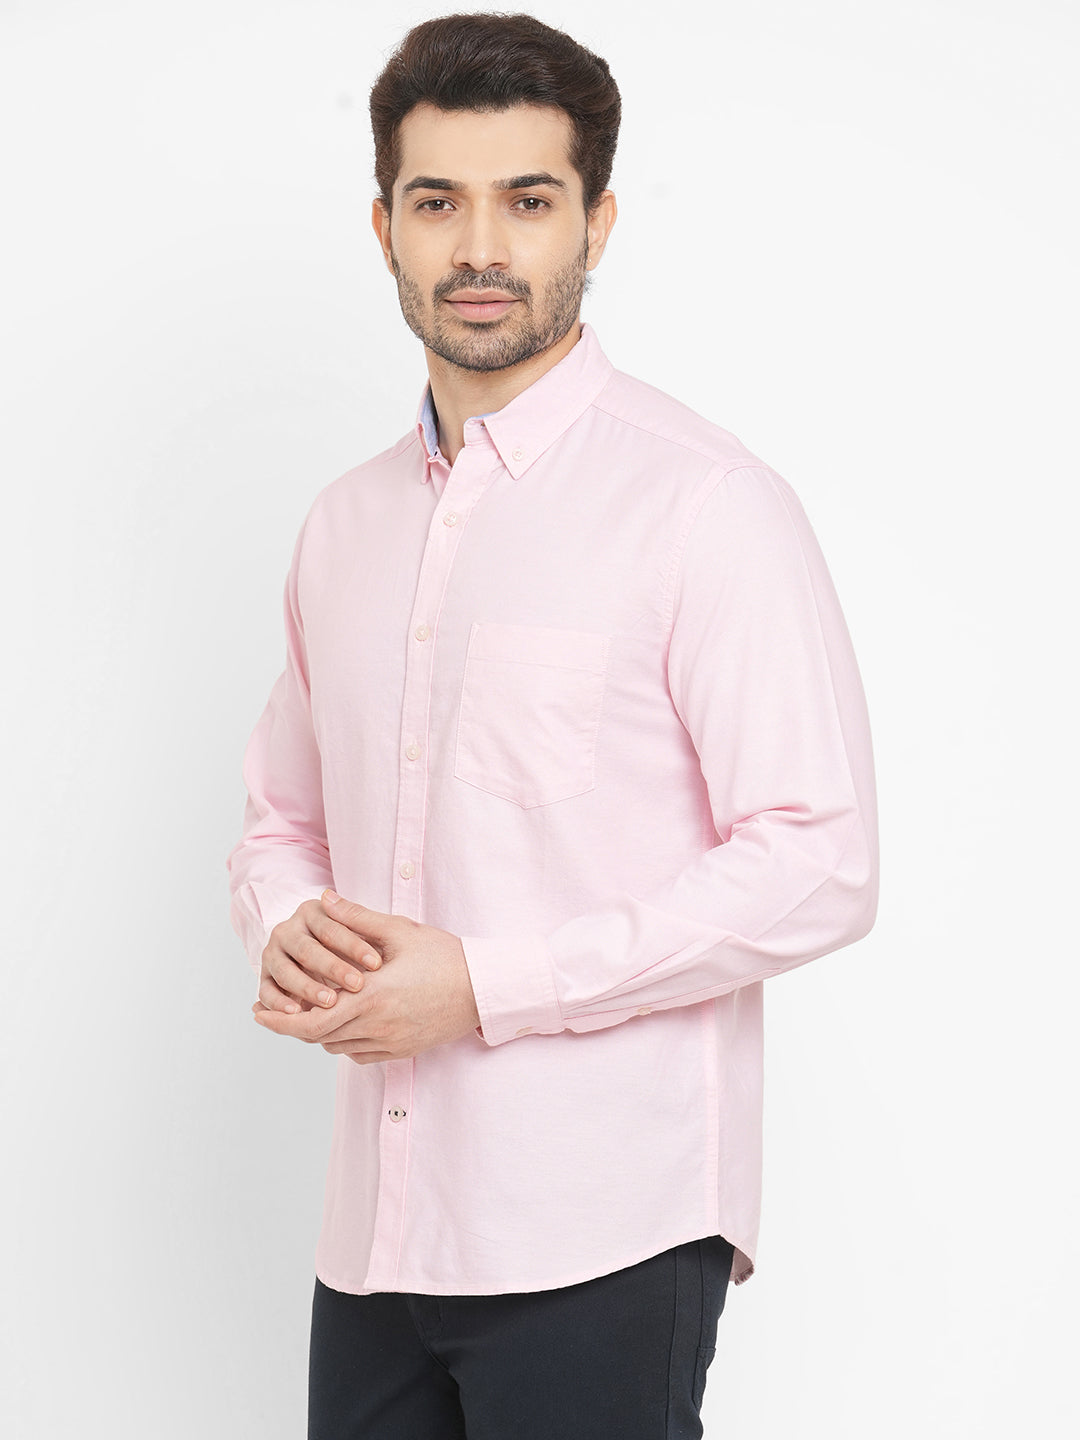 Men's Oxford Cotton Button down Collar Long Sleeved Shirt - Pink